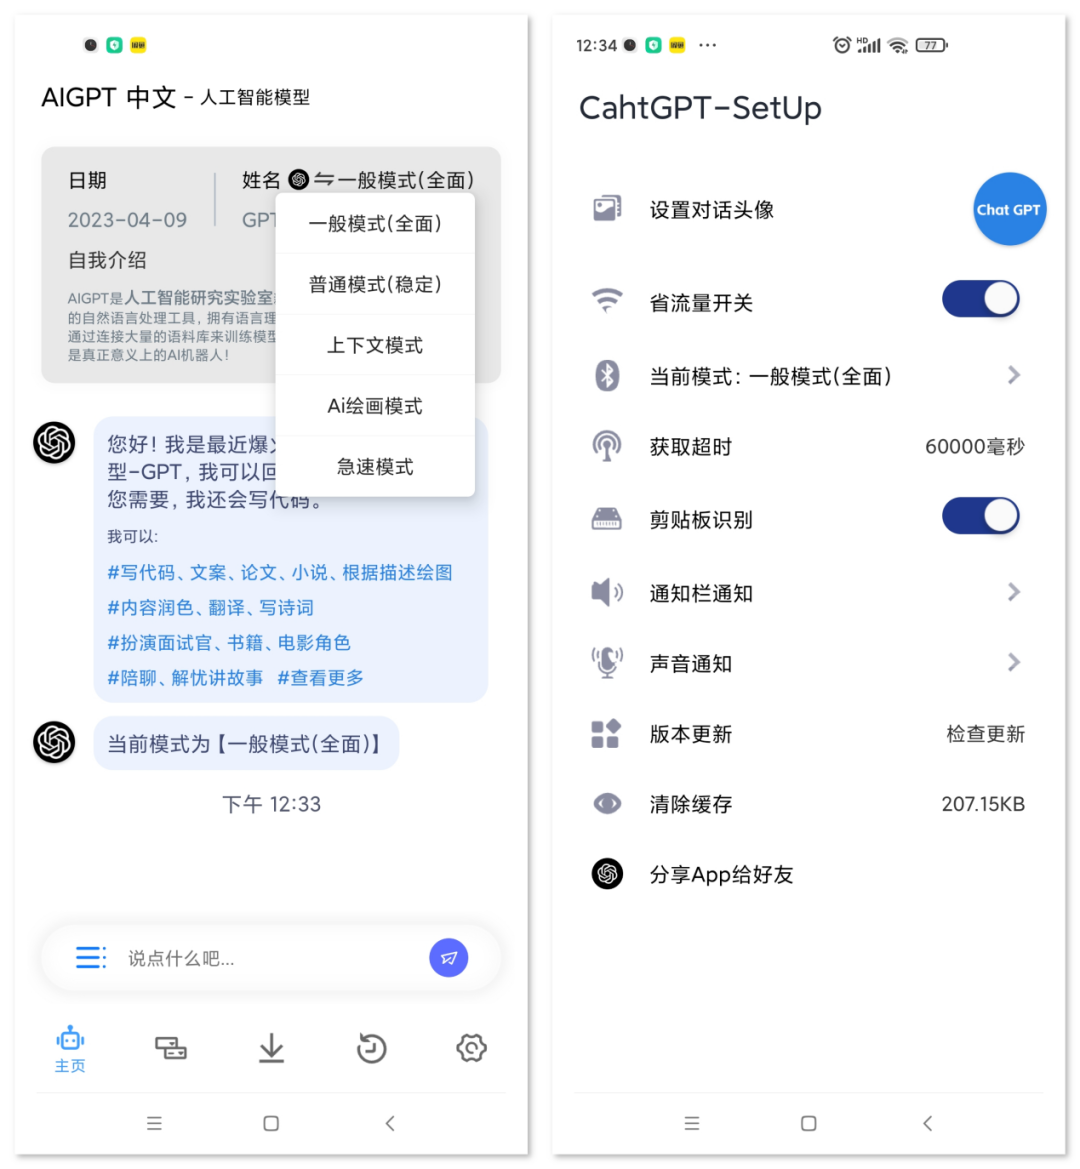 ChatGPT 中文版立即体验享受快乐 更新一波